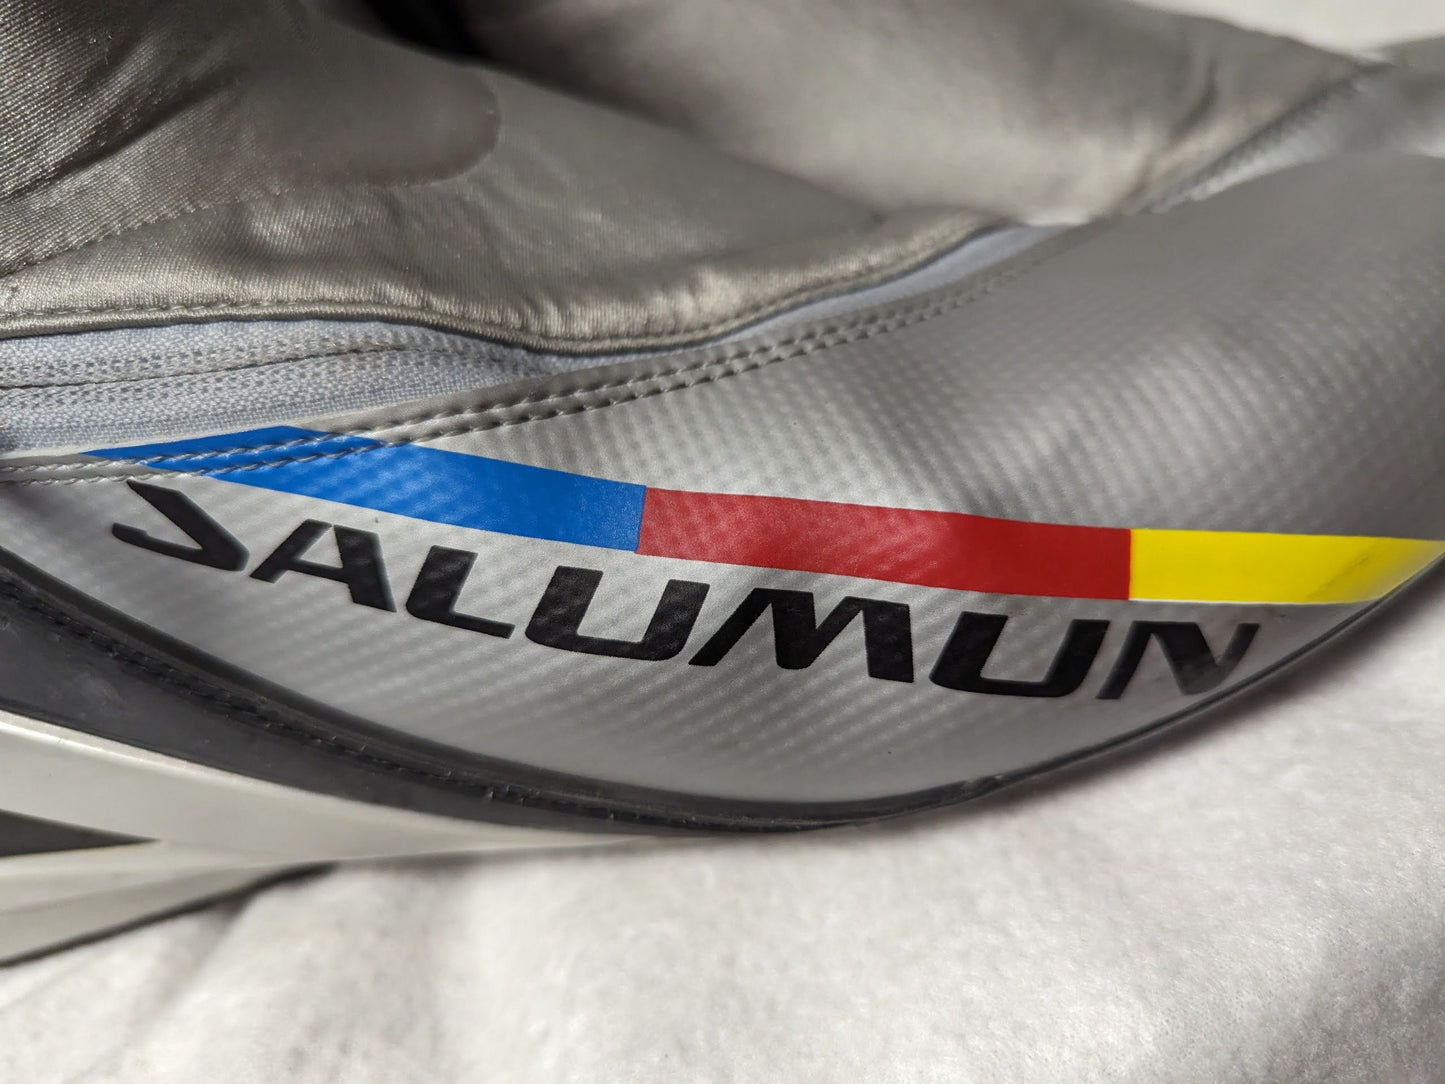 Salomon Pilot XC Cross Country SNS Pilot Ski Boots Size 30 Color Silver Condition Used